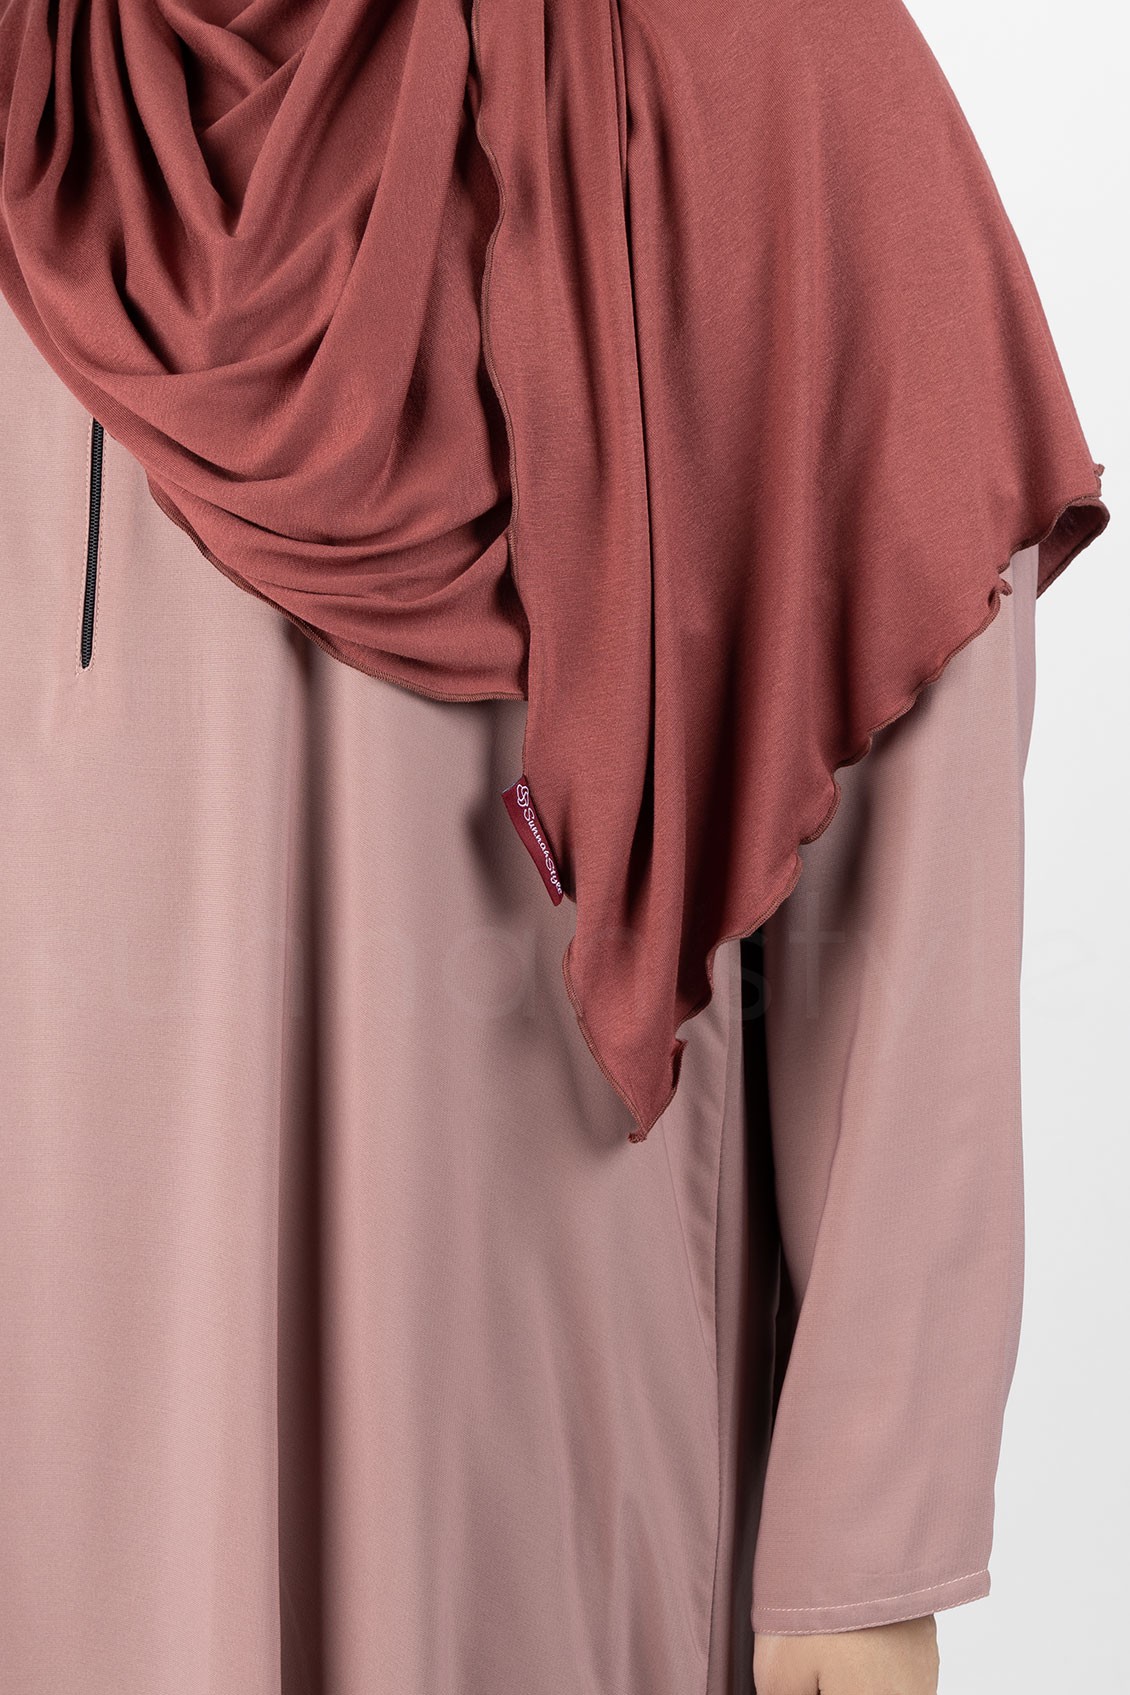 Sunnah Style Plain Closed Abaya Oyster Pink